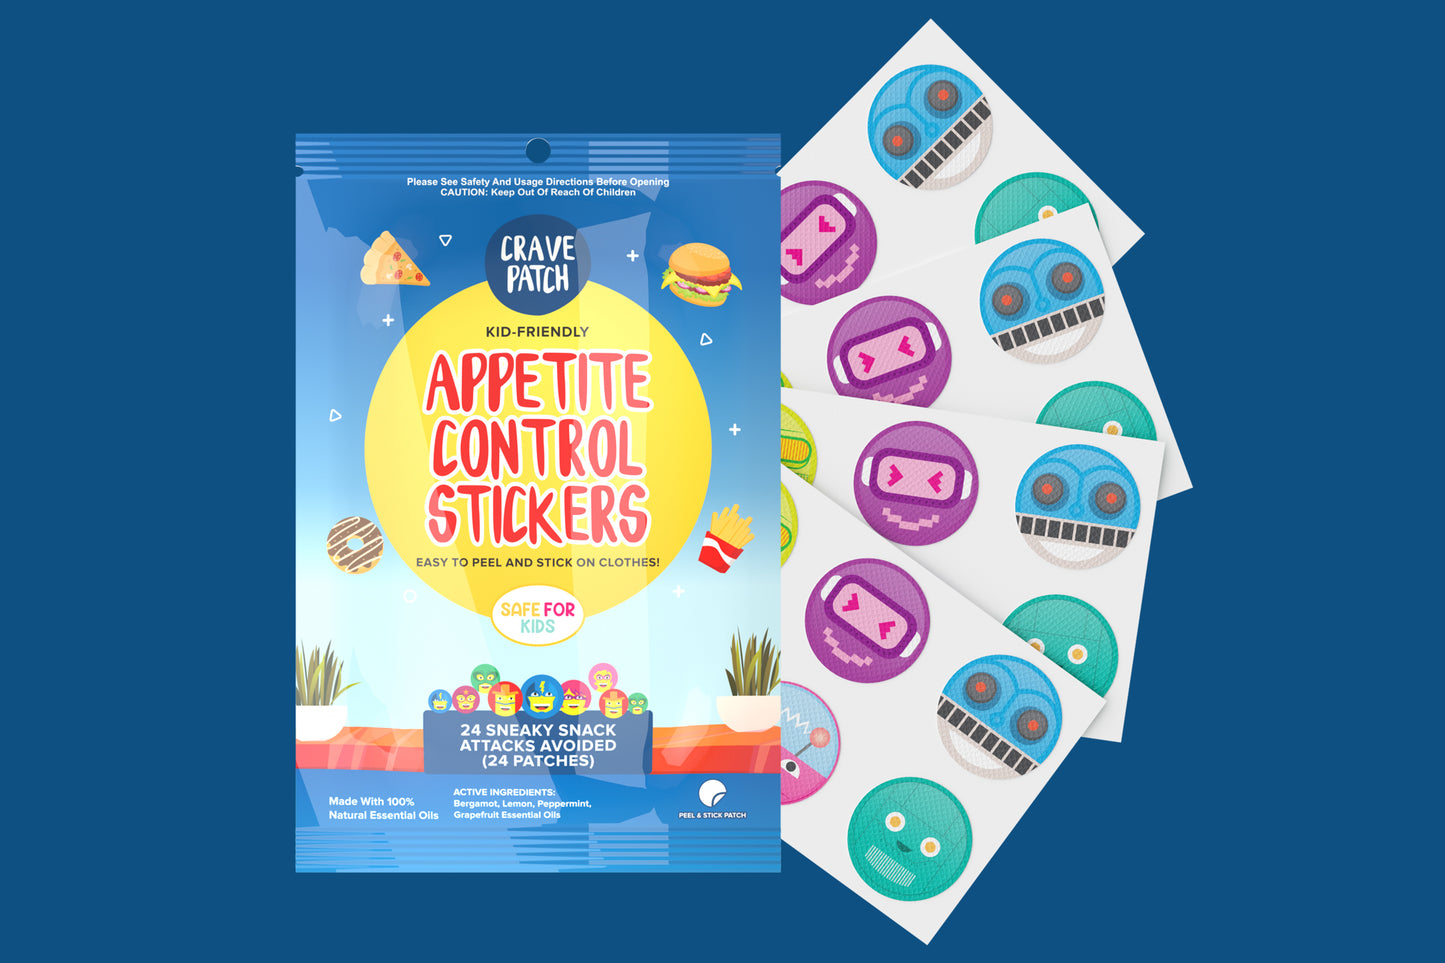 CravePatch Appetite Control Stickers